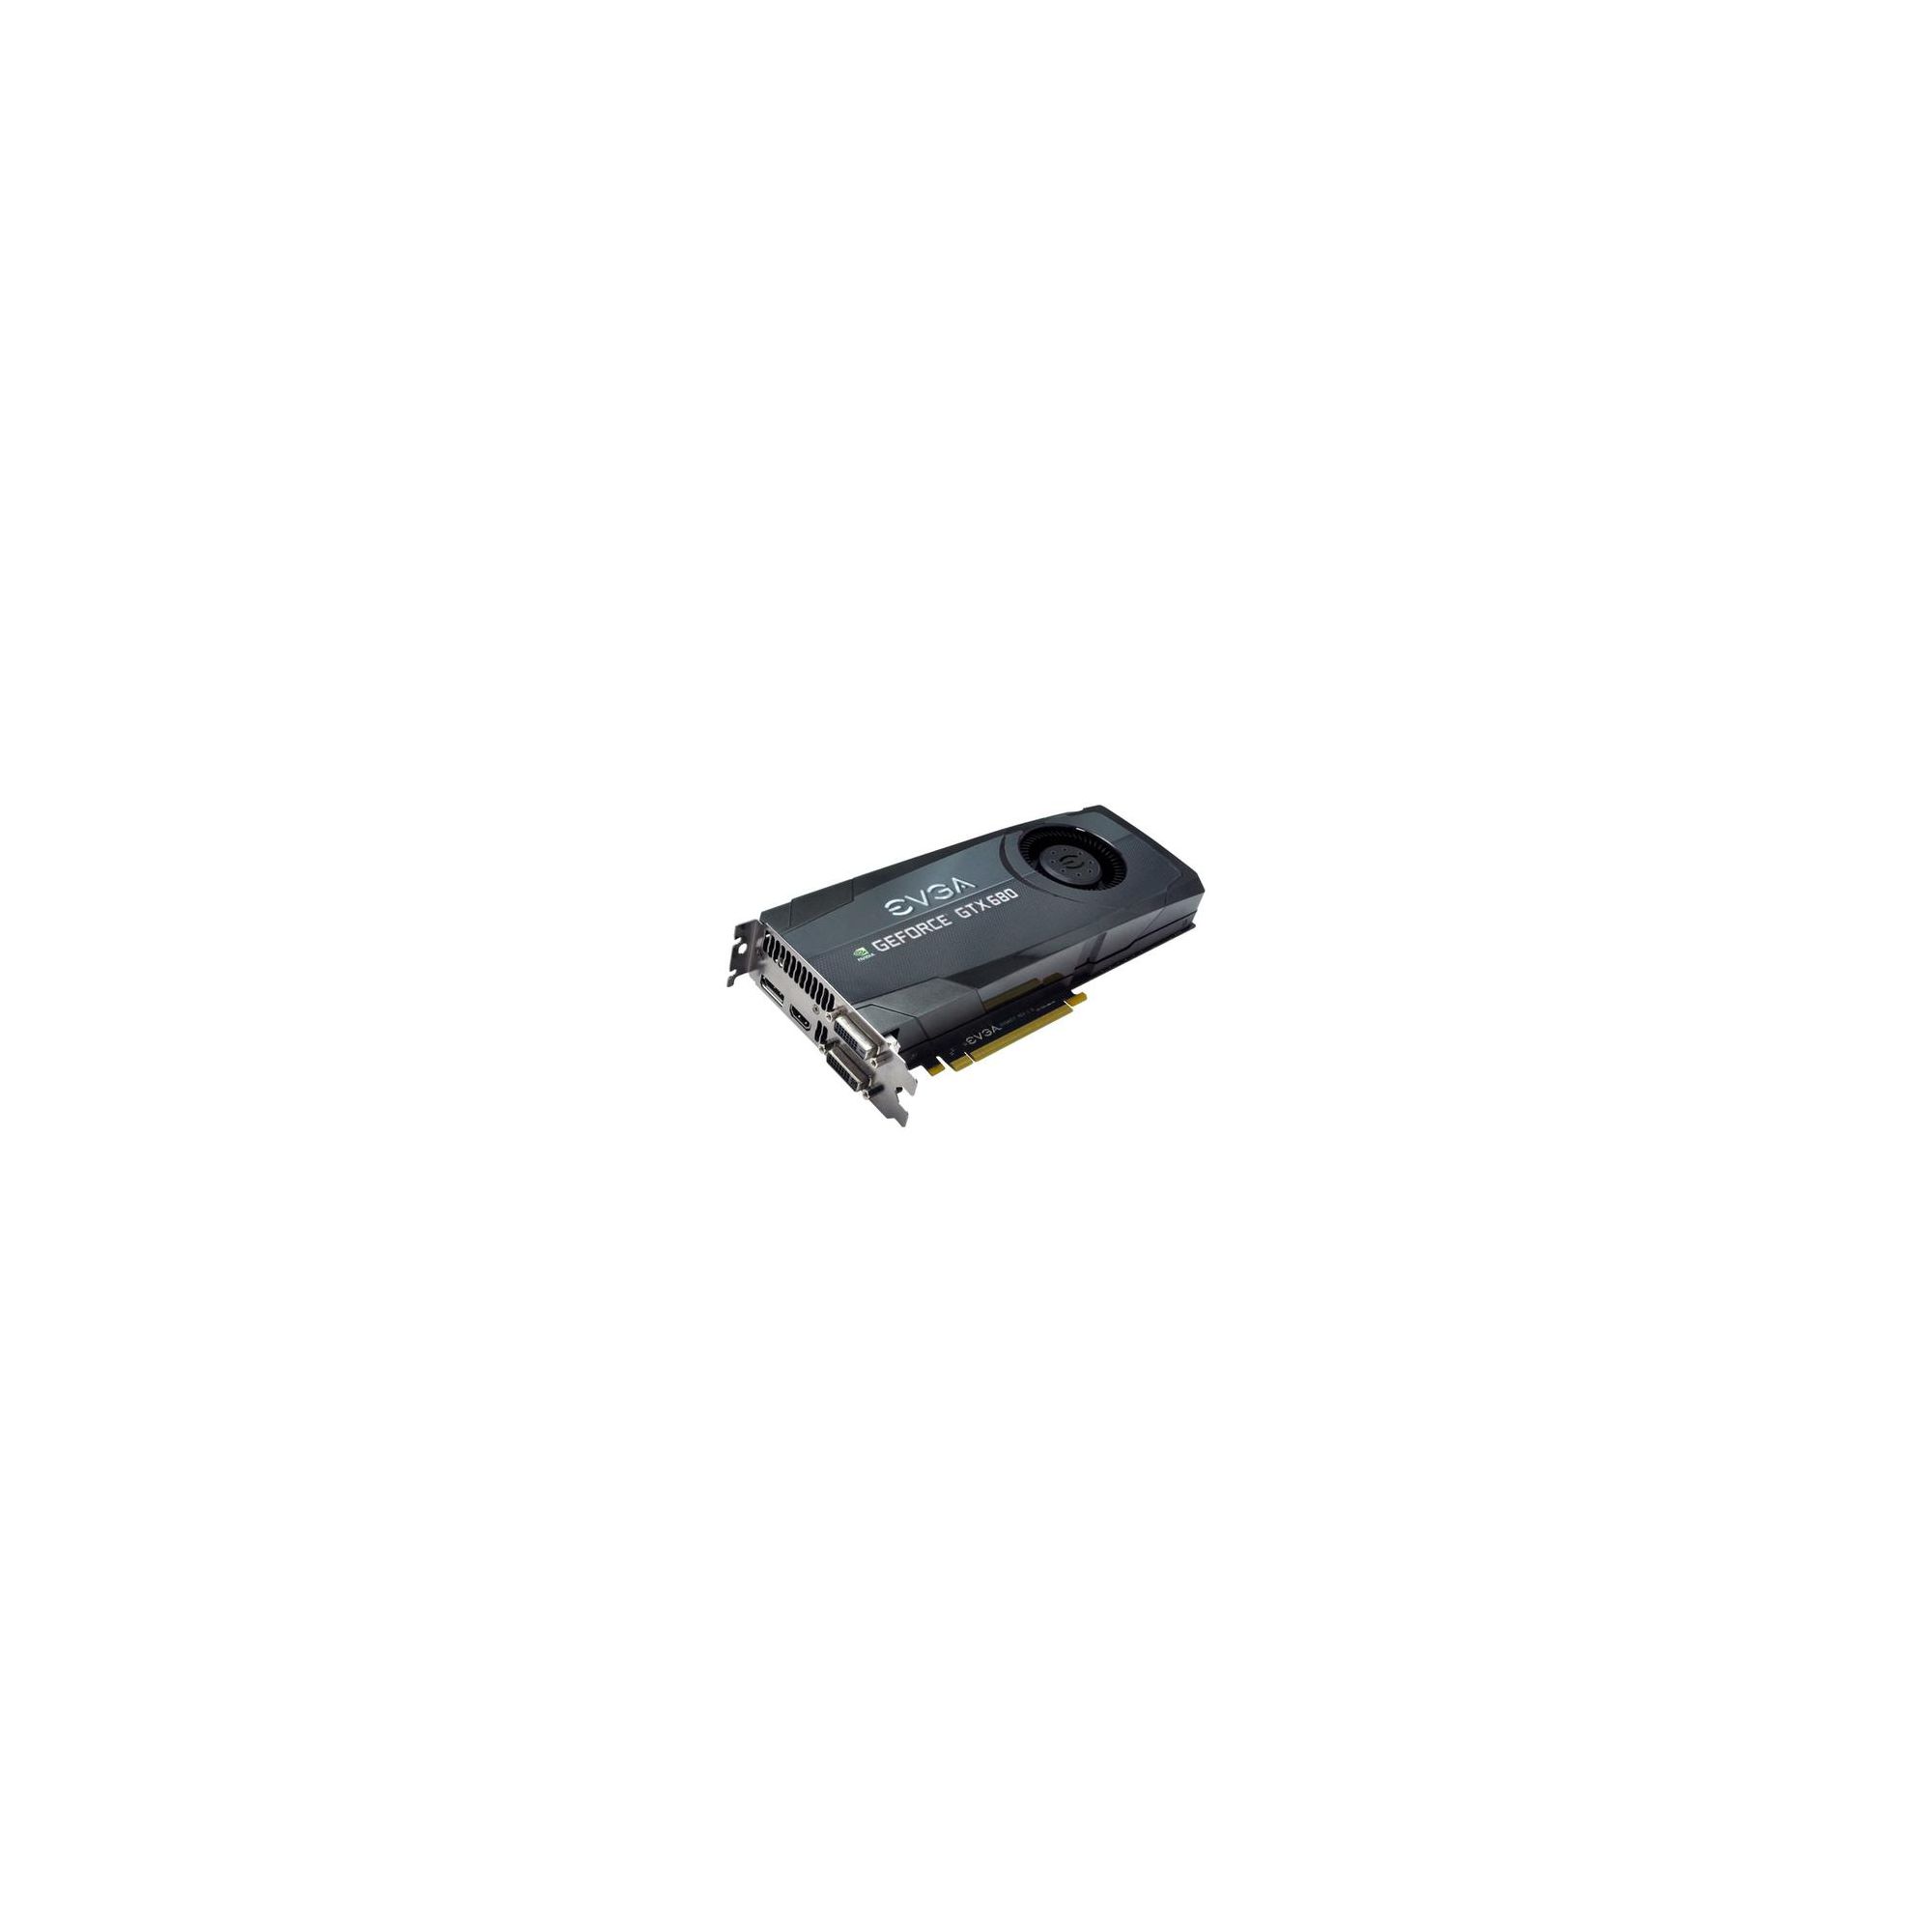 EVGA NVIDIA GTX680 1006MHz 6000MHz 2048MB 256-bit DDR5 2DUAL DVI HDMI DP FAN PCI-E GRAPHICS CARD at Tesco Direct